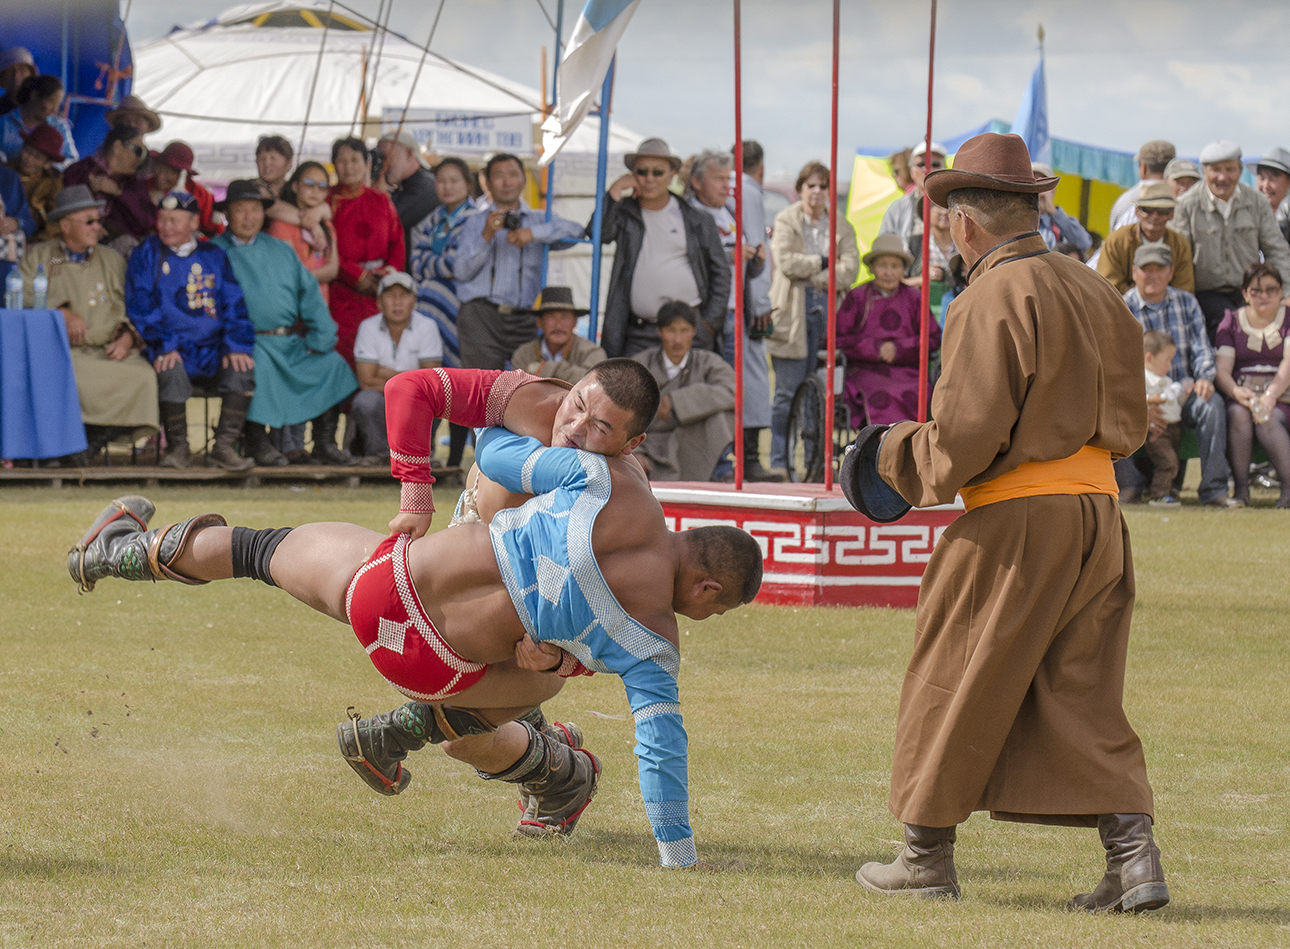 naadam wrestling photo in mongolia.jpg